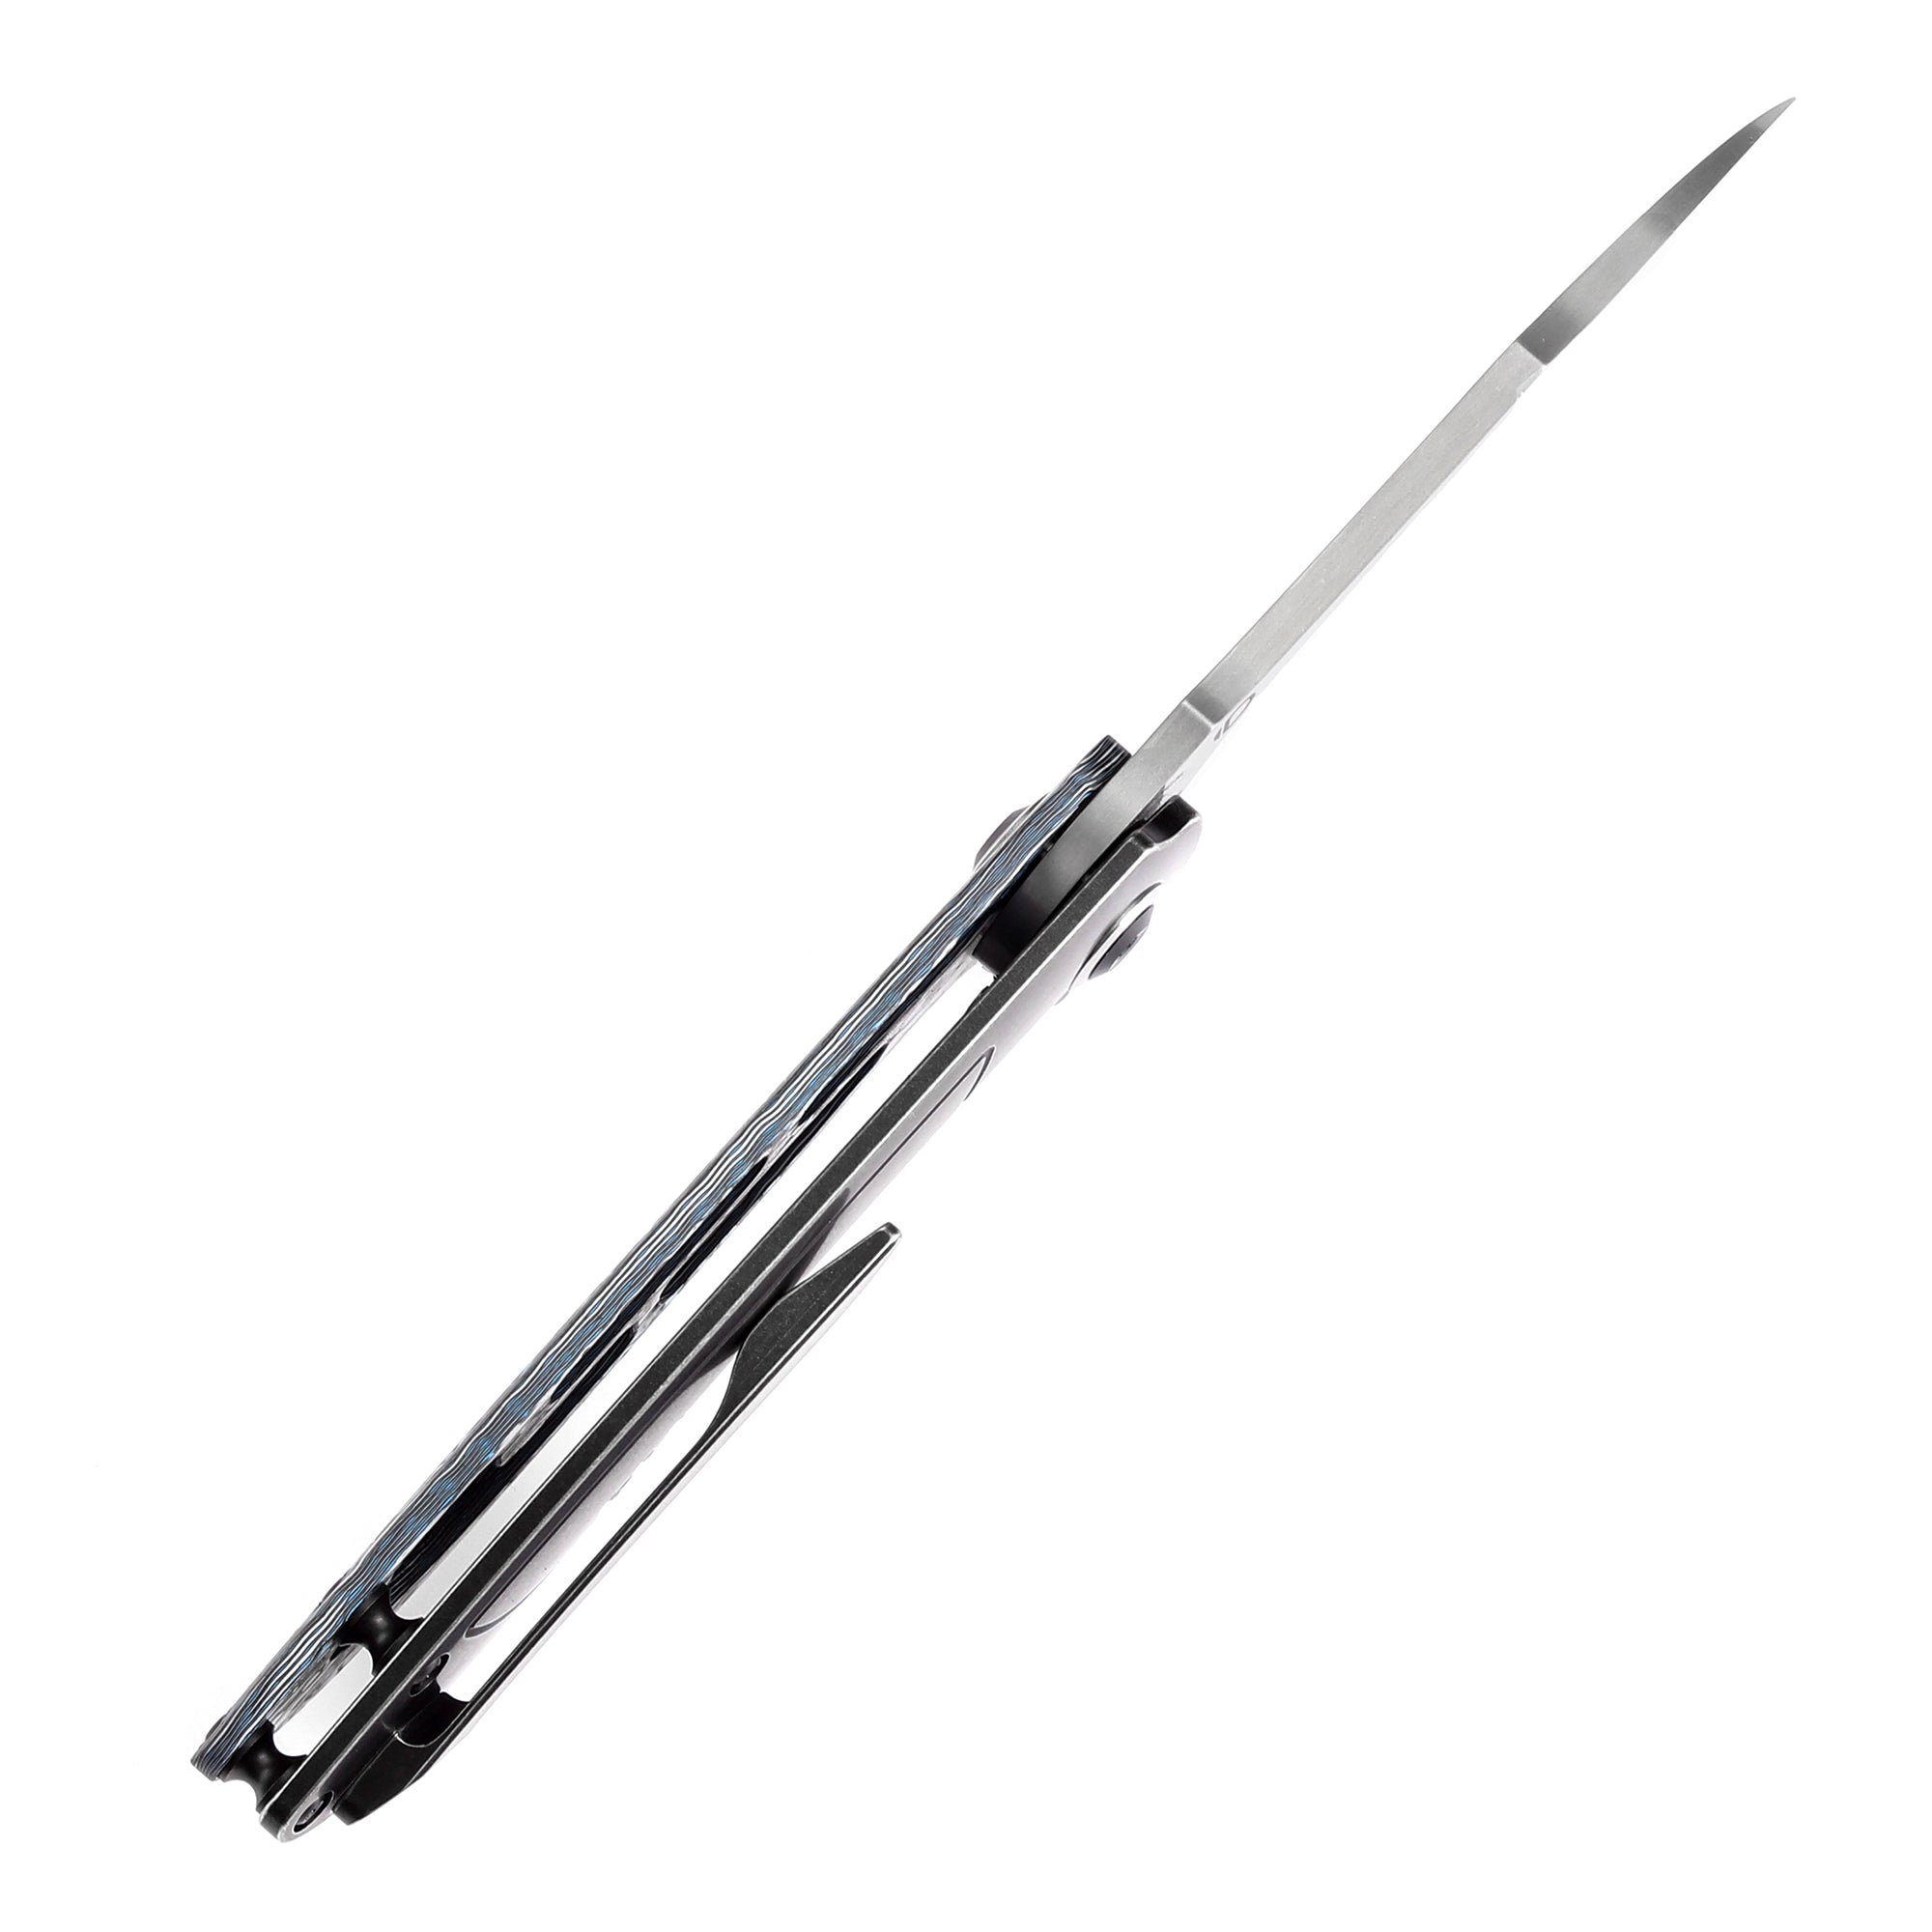 Kansept Prometheus K1040A3 CPM-S35VN Blade Carbon Fiber Titanium Handle Folding Knife